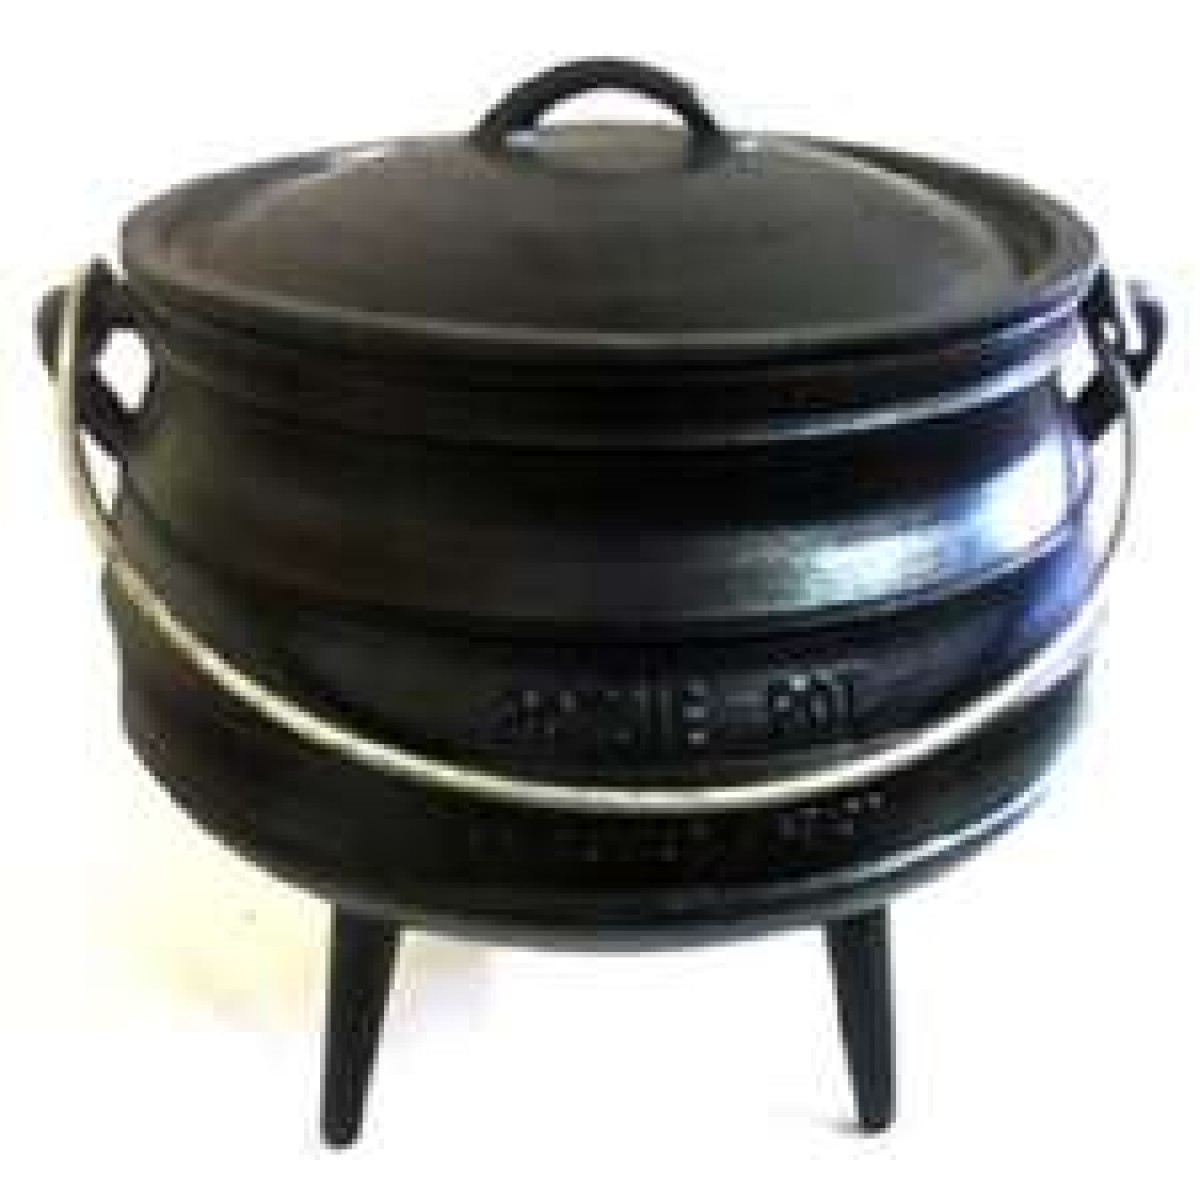 https://www.mysticconvergence.com/image/cache/catalog/wicca/cast-iron-traditional-3-legged-cauldron-potjie-pot-1200x1200.jpg